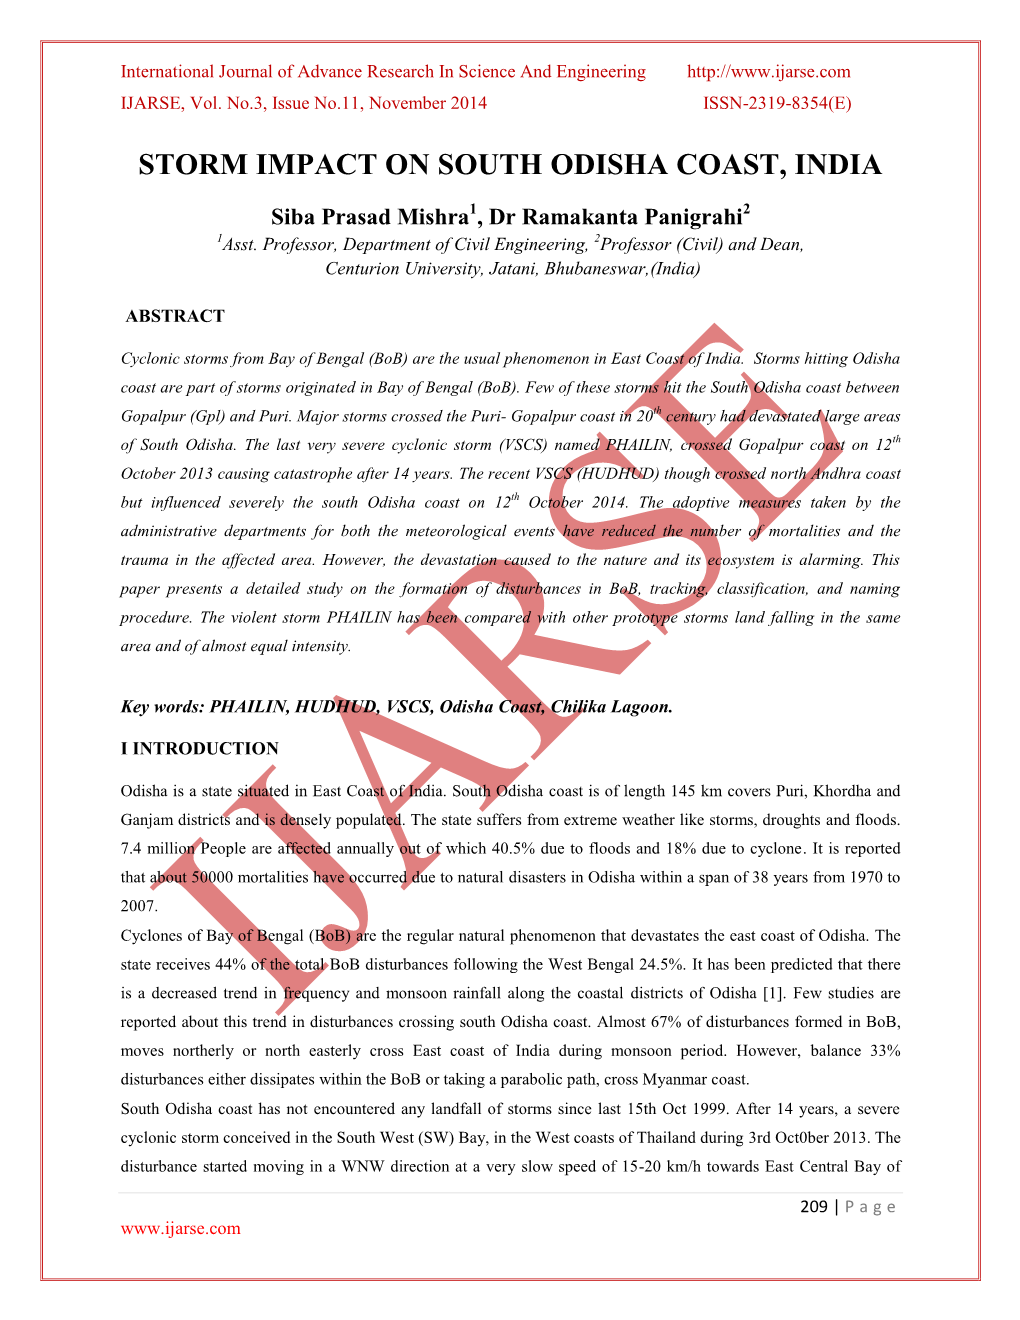 Storm Impact on South Odisha Coast, India